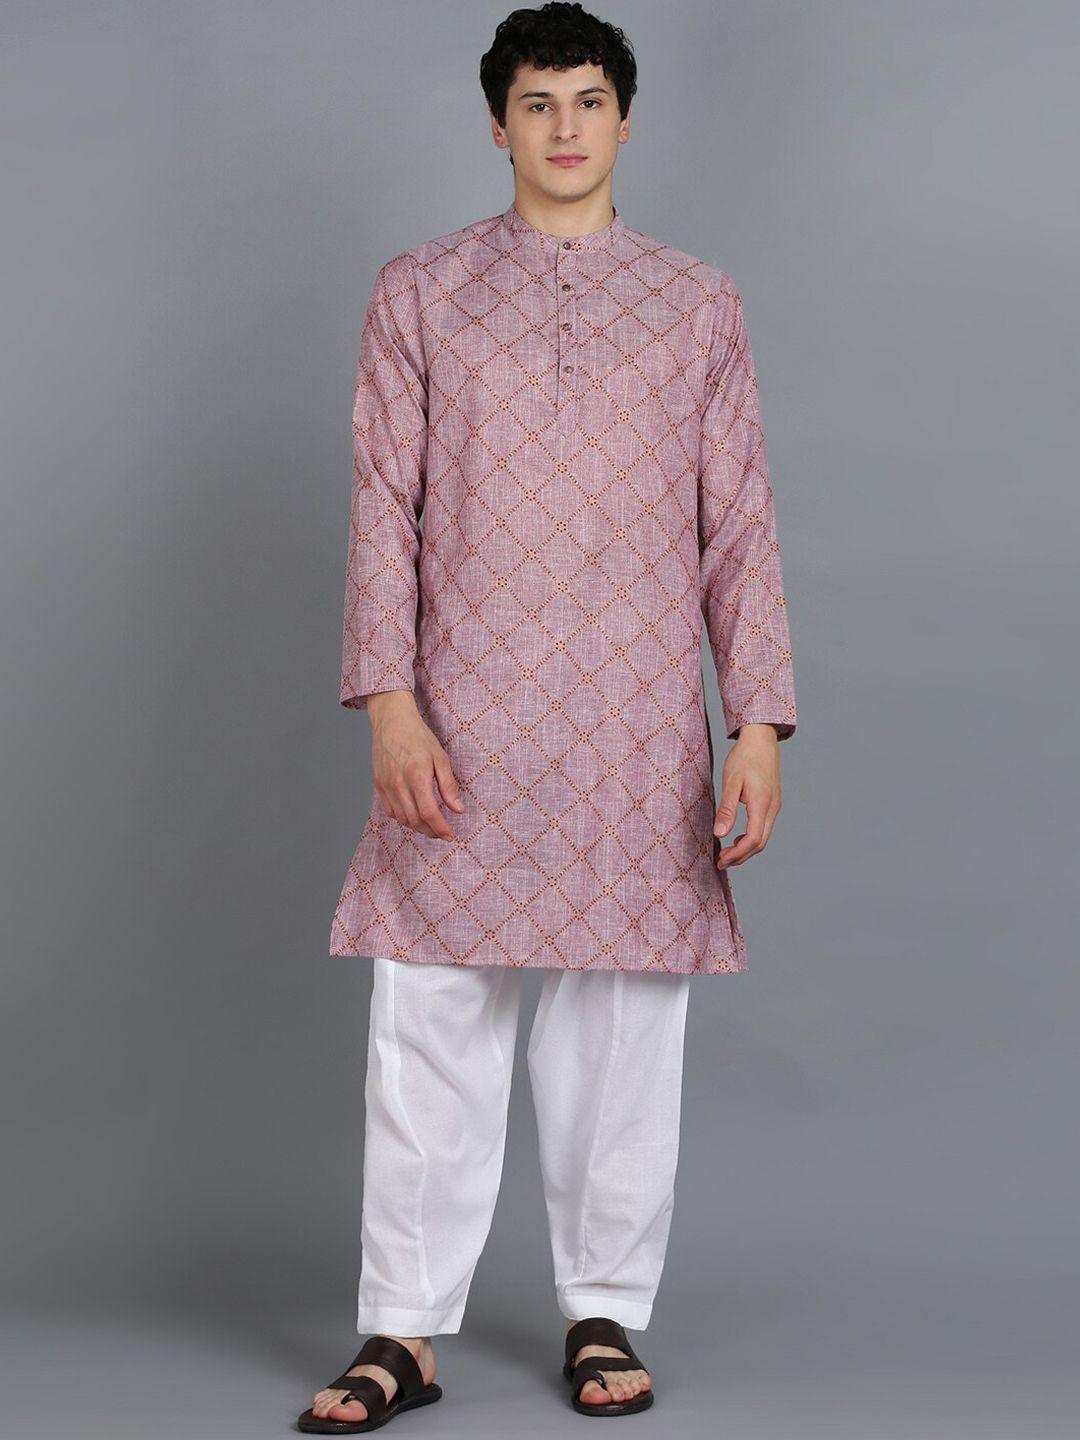 here&now brown & white ethnic motif printed band collar kurta with pyjamas